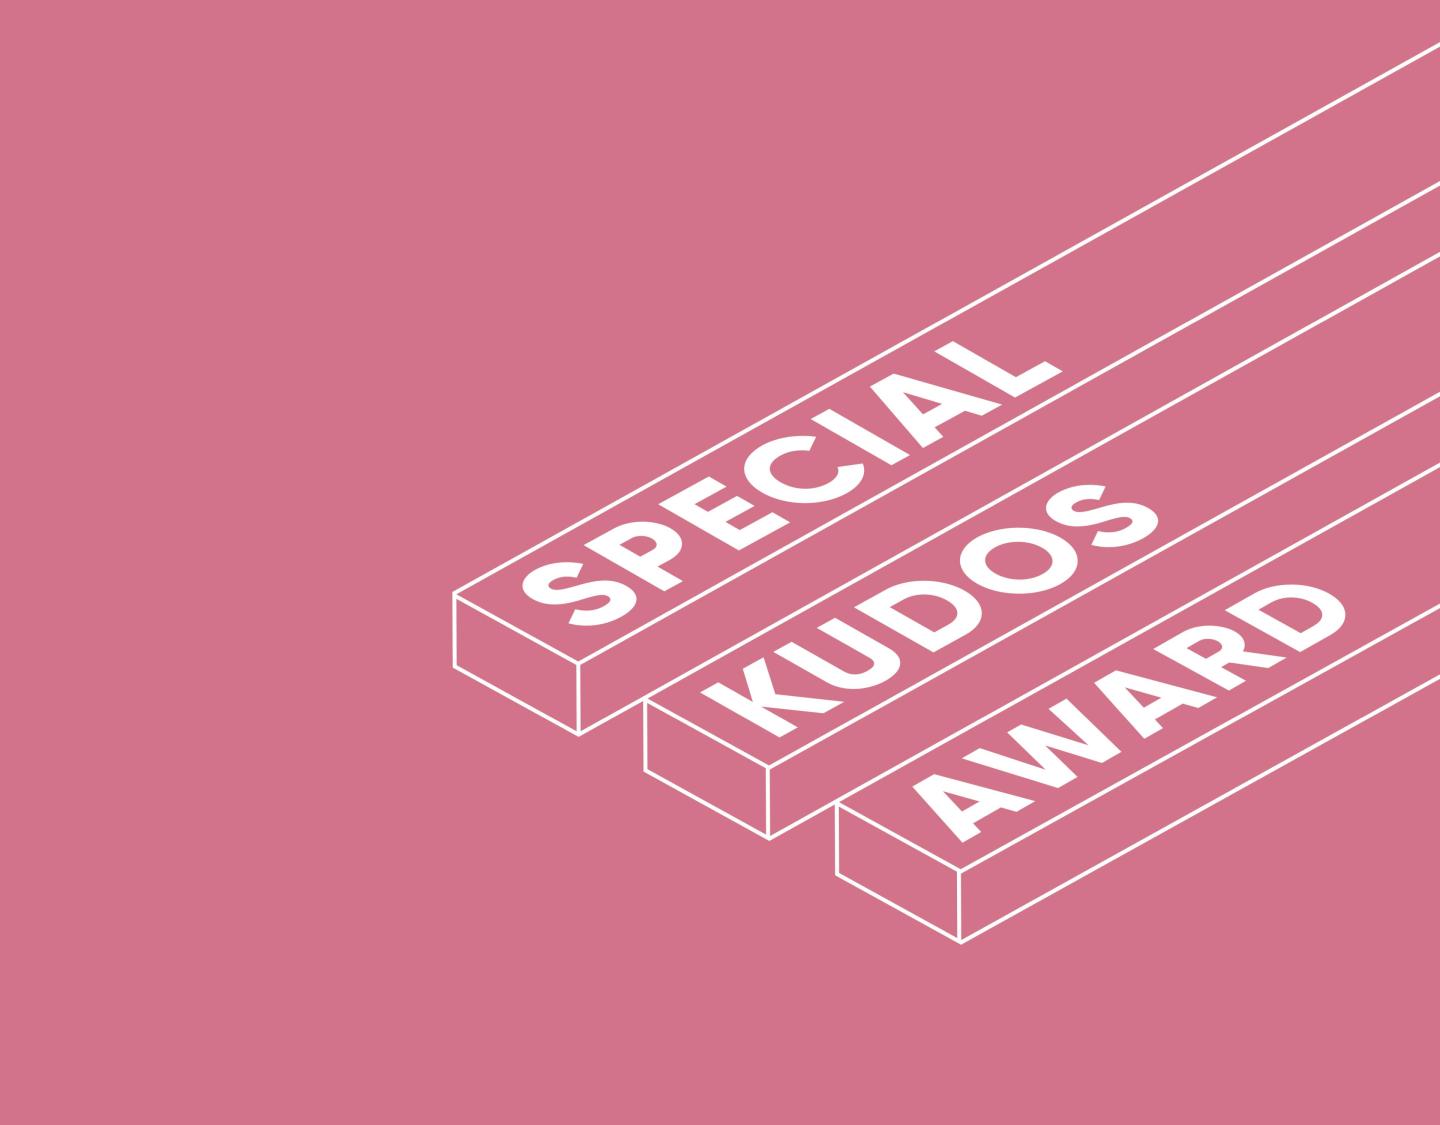 Special Kudos Award from CSSDA